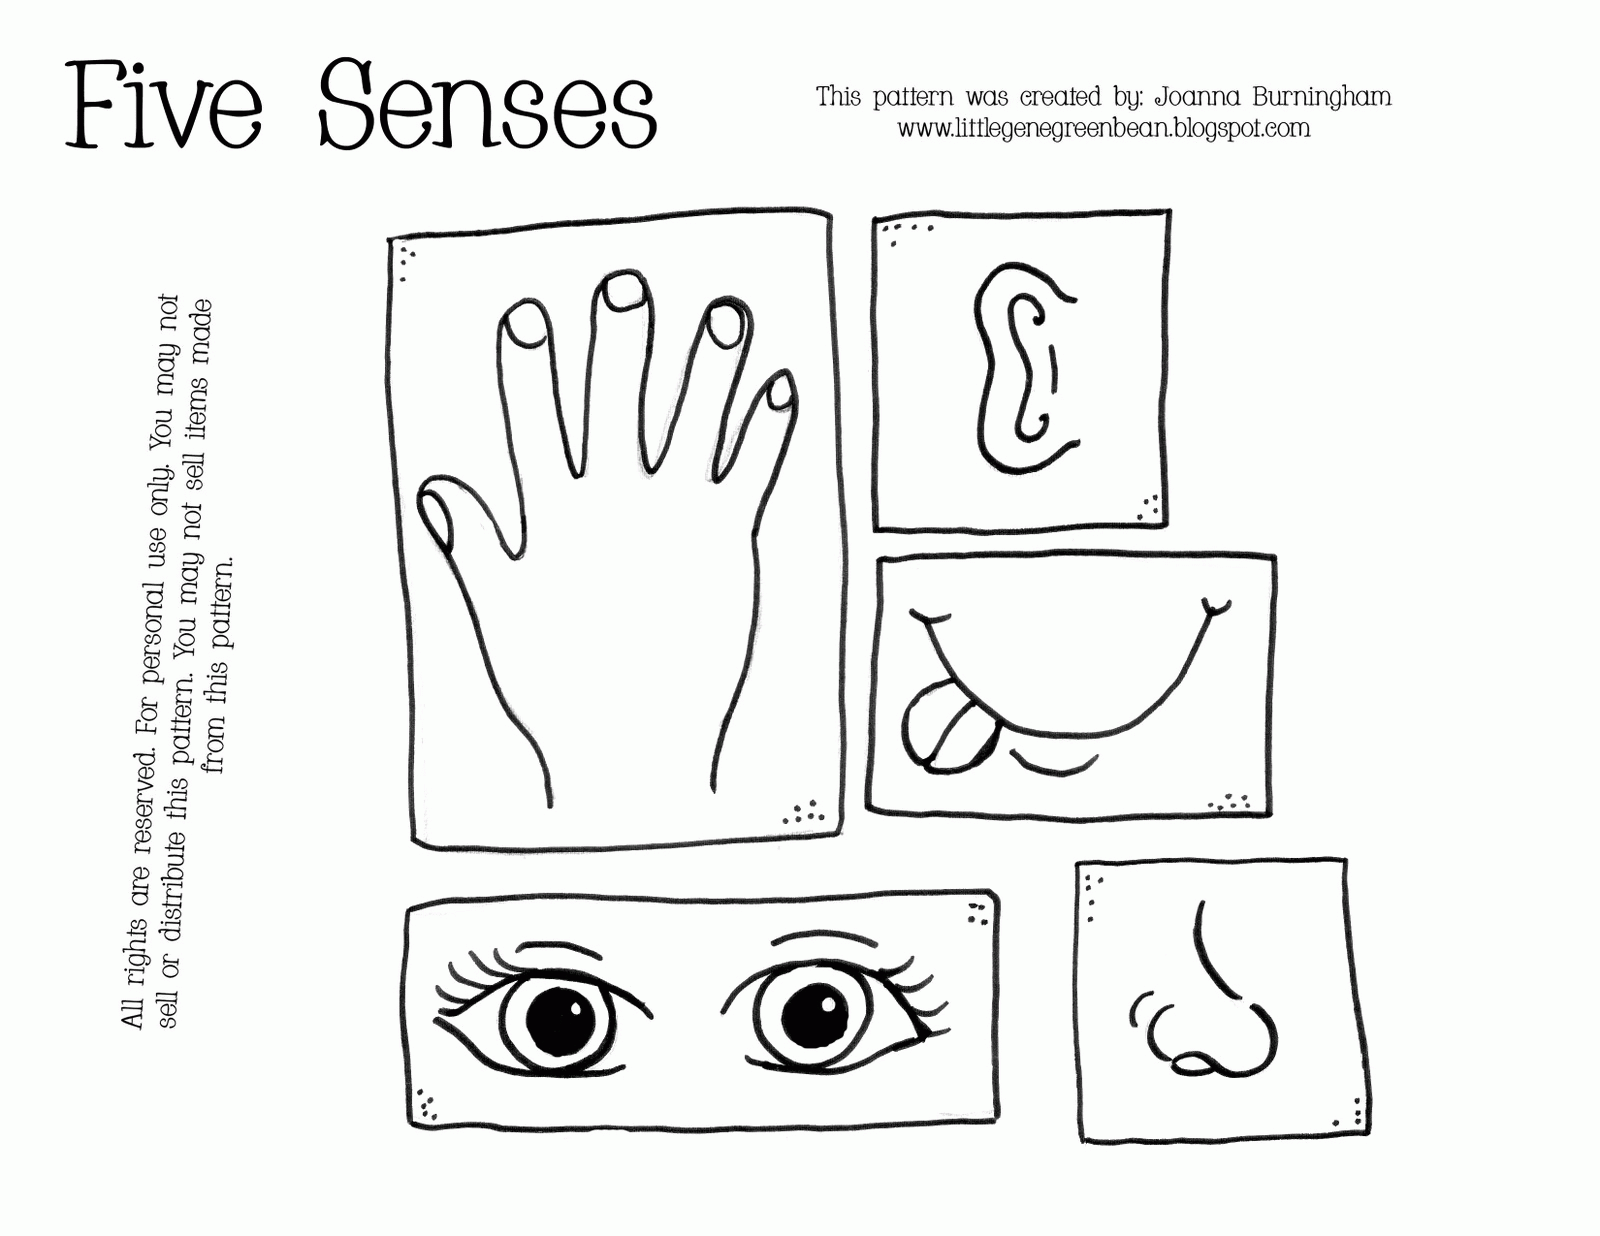 five senses coloring pages five senses coloring pages coloring home senses five coloring pages 